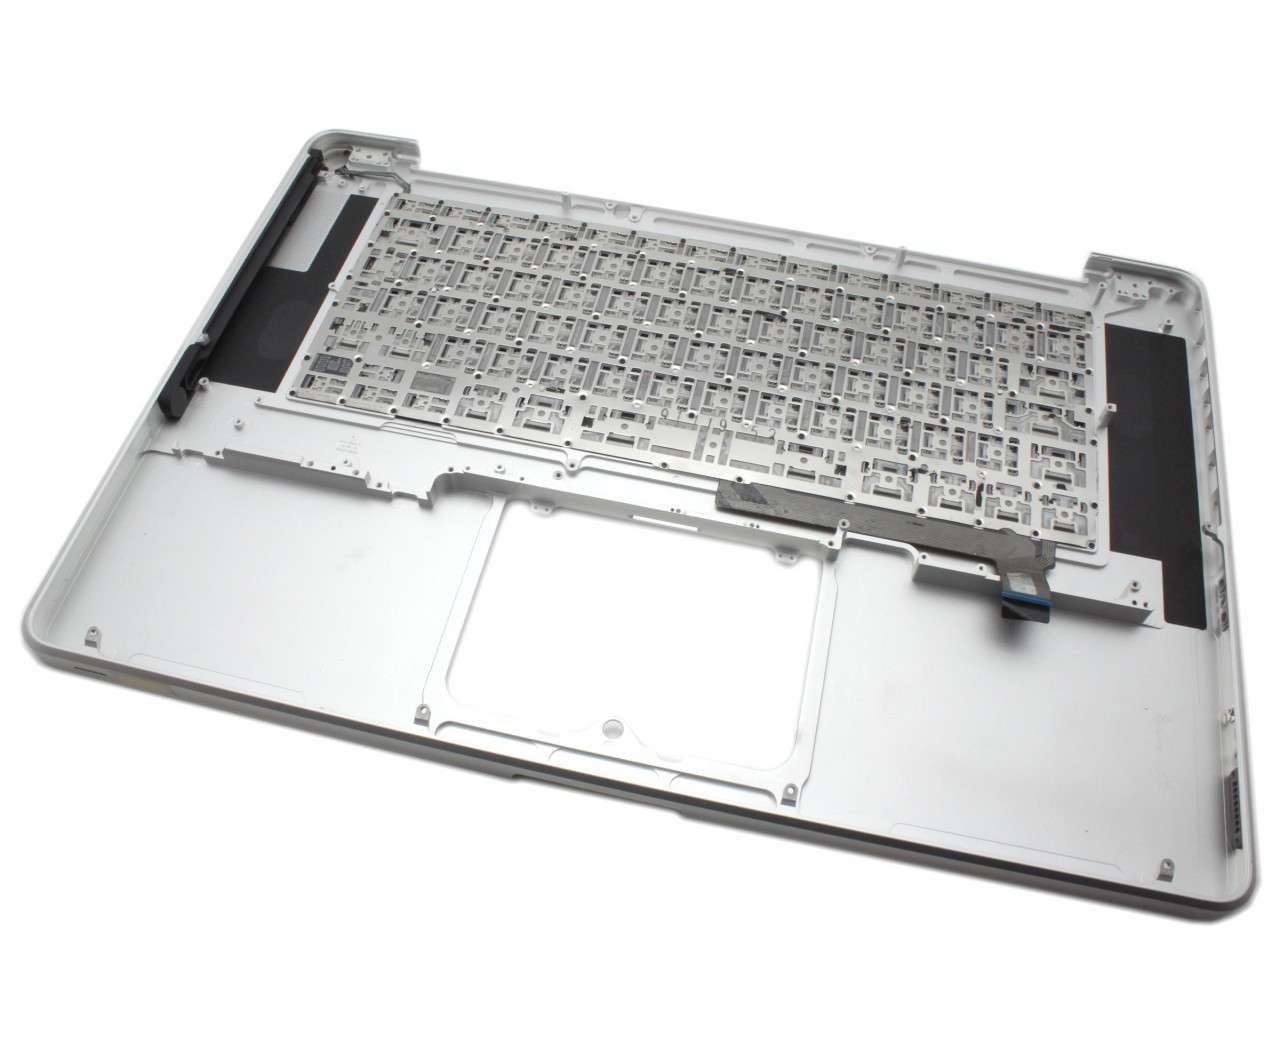 Tastatura Apple MacBook Pro 15 MC371LL A Neagra cu Palmrest Argintiu Refurbished Apple Apple